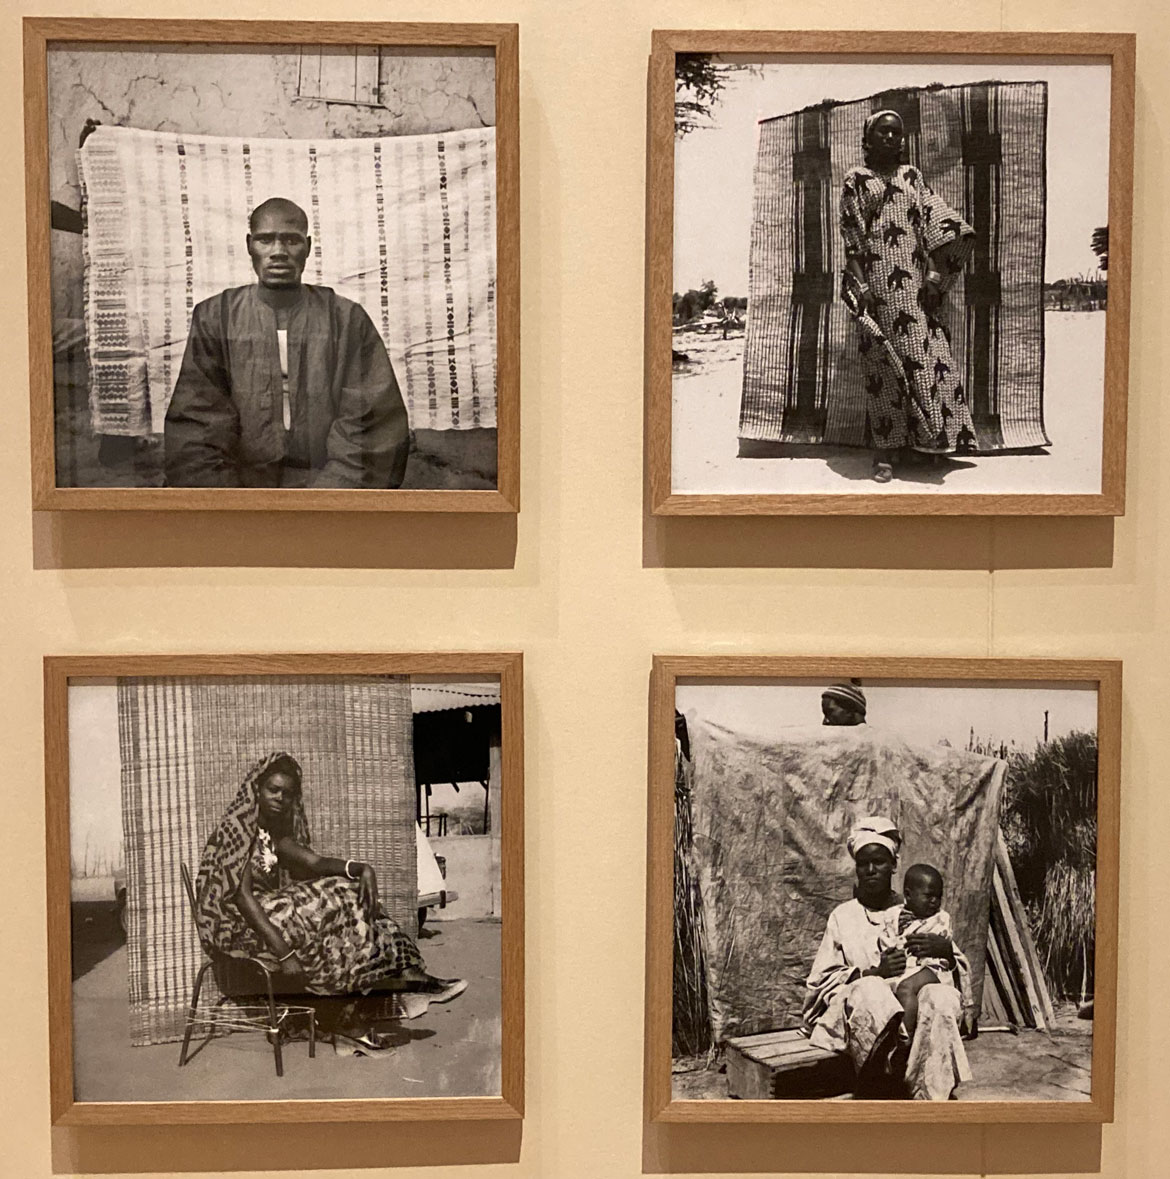 Oumar Ly, (clockwise from top left) "Untitled, Bush Portrait, Tissue, Podor, Senegal," "Untitled, Bush Portrait, Woman, Podor, Senegal," "Untitled, Bush Portrait, Boubou, Podor, Senegal," "Bush Portrait, Renault, Podor, Senegal," 1963-78.